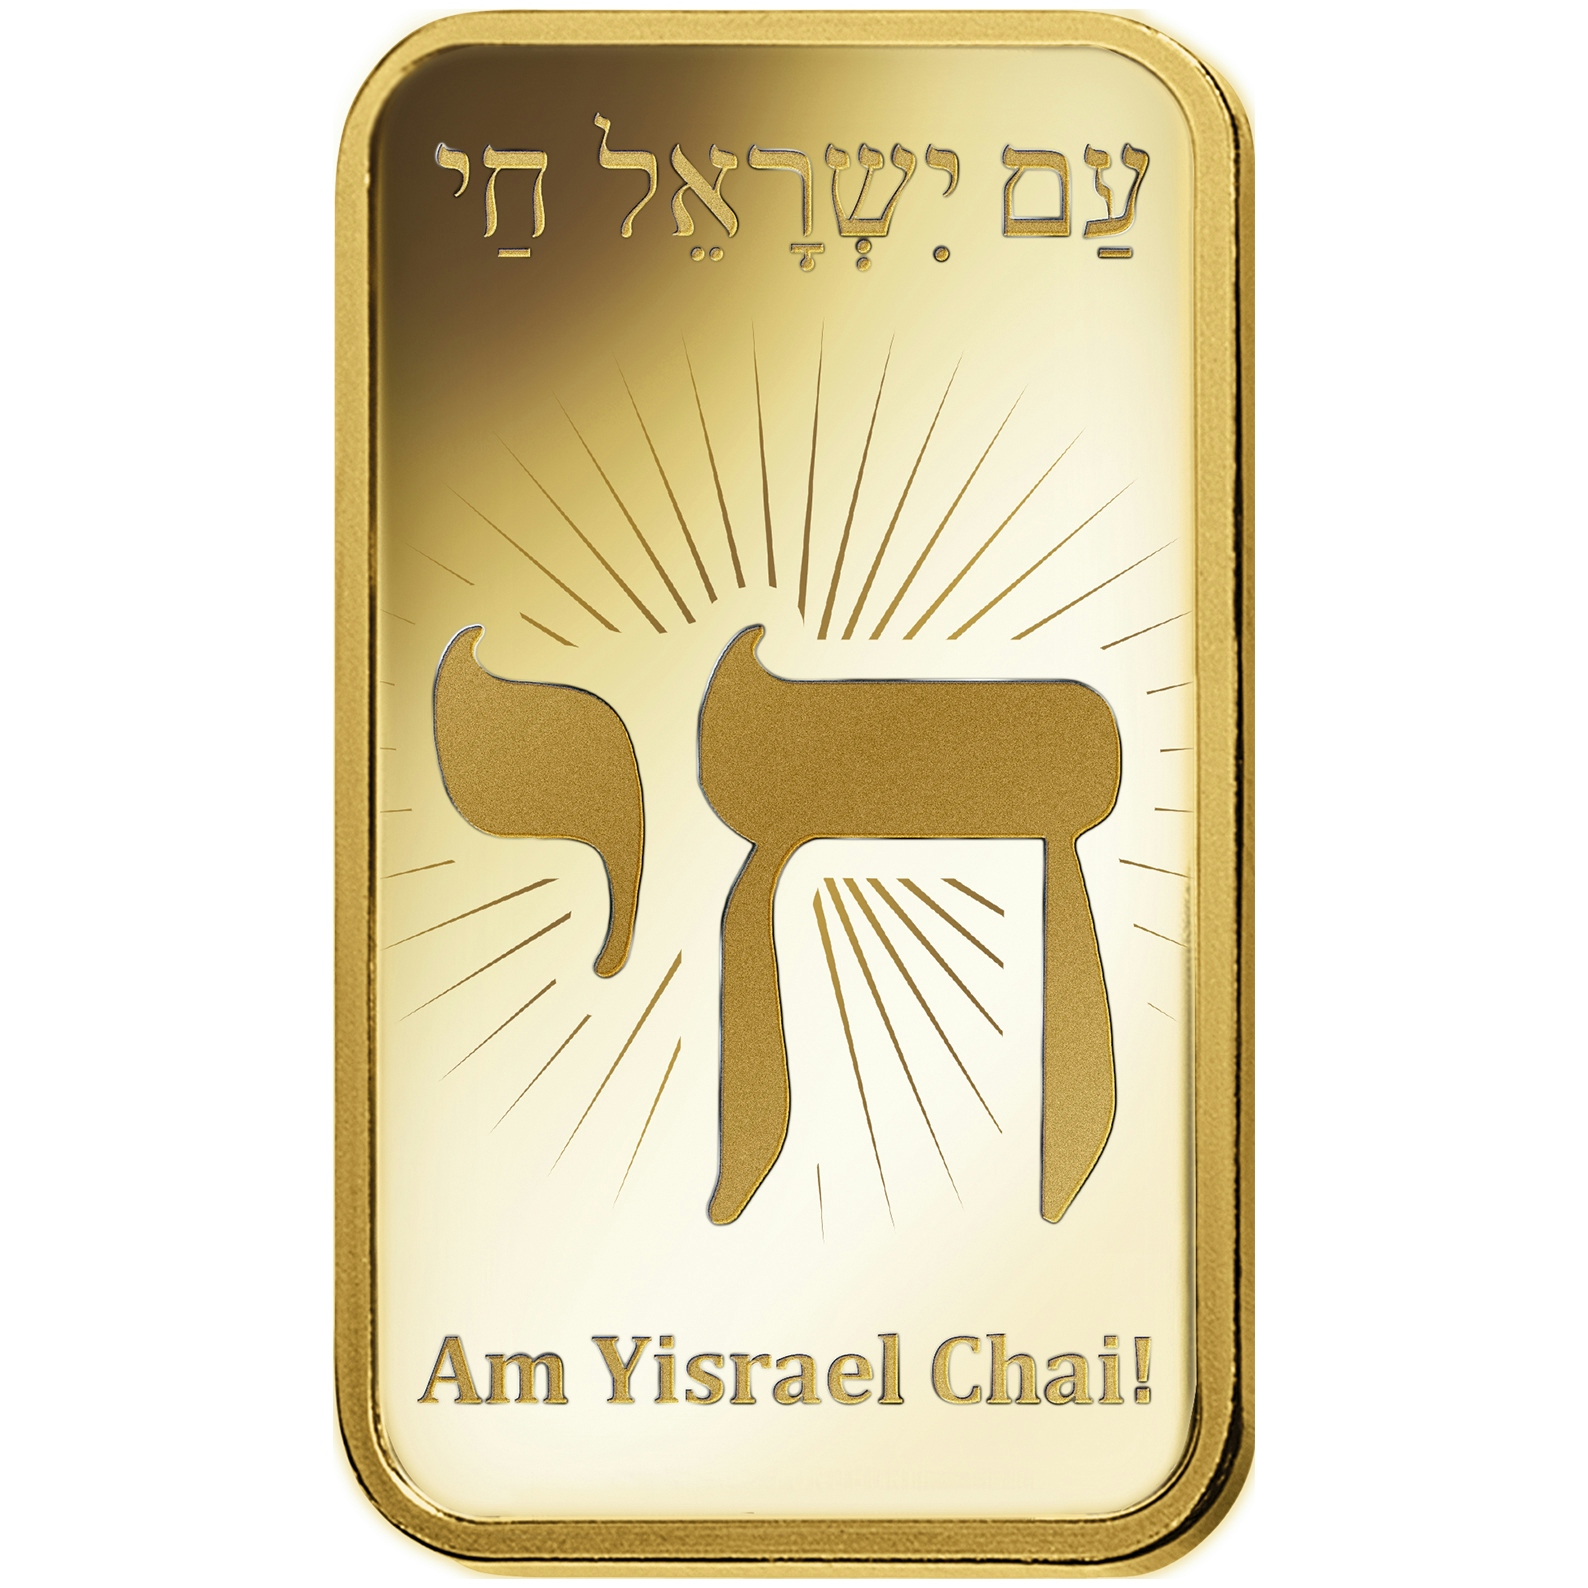 Kaufen Sie 1 Unze FeinGoldbarren Am Yisrael Chai - PAMP Schweiz - Front